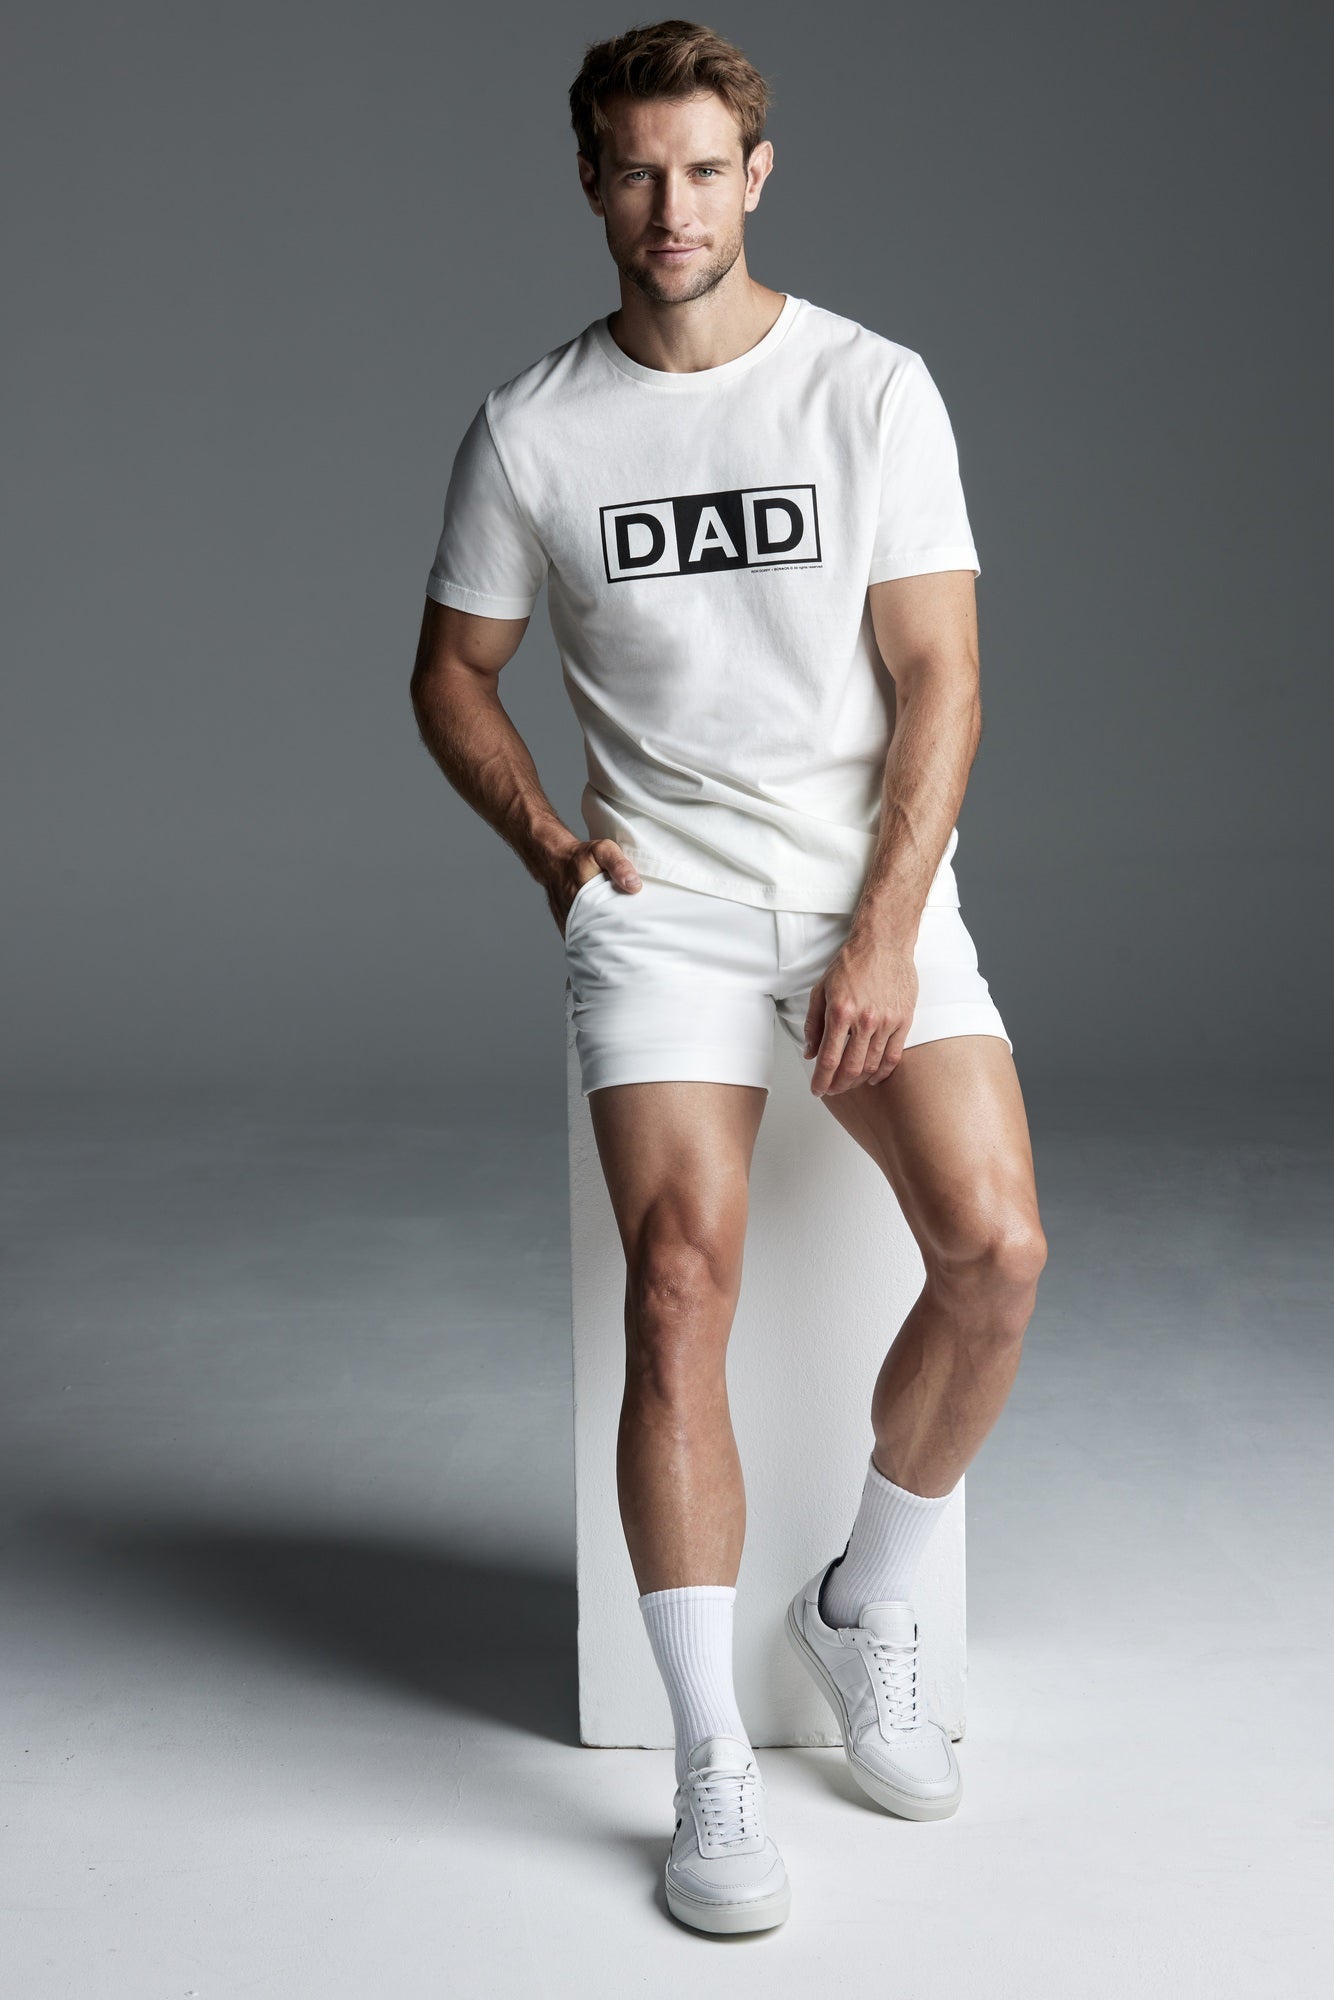 T-shirt - Dad ecru man cotton bonton + ron dorff